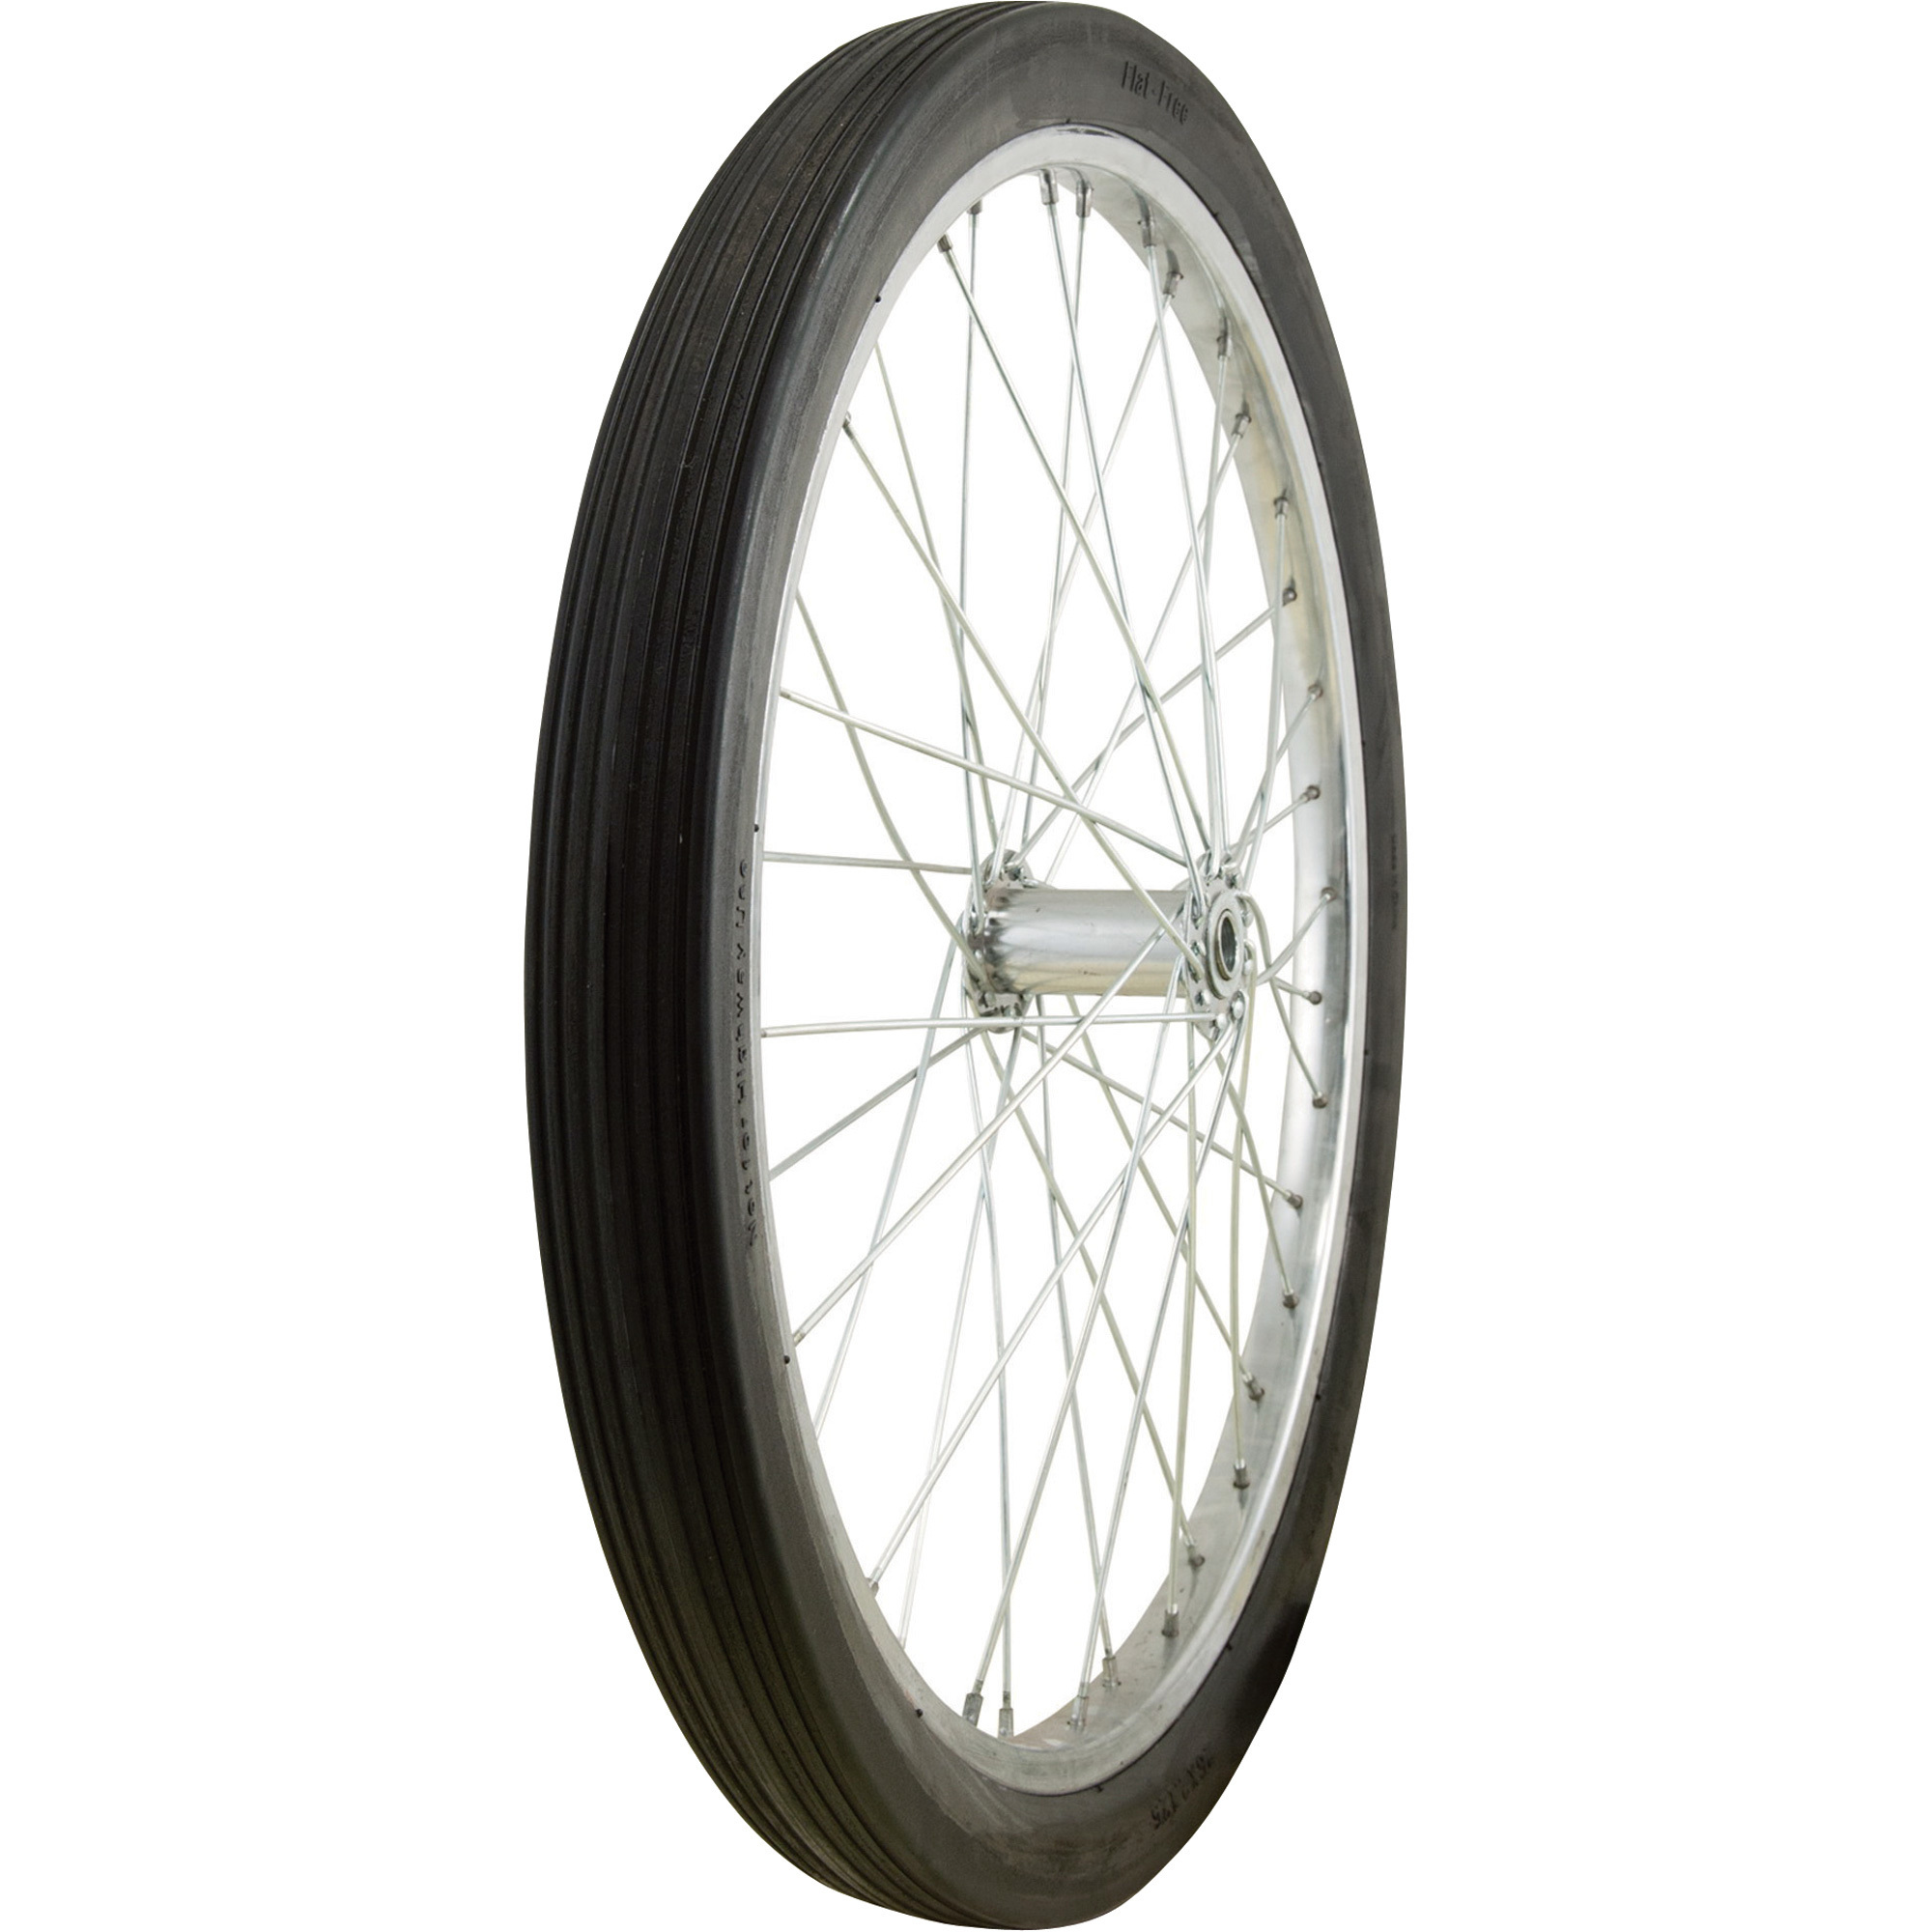 Marathon Tires Flat-Free Tire on Steel Spoke Rim â 3/4Inch Bore, 24 x 2.0Inch